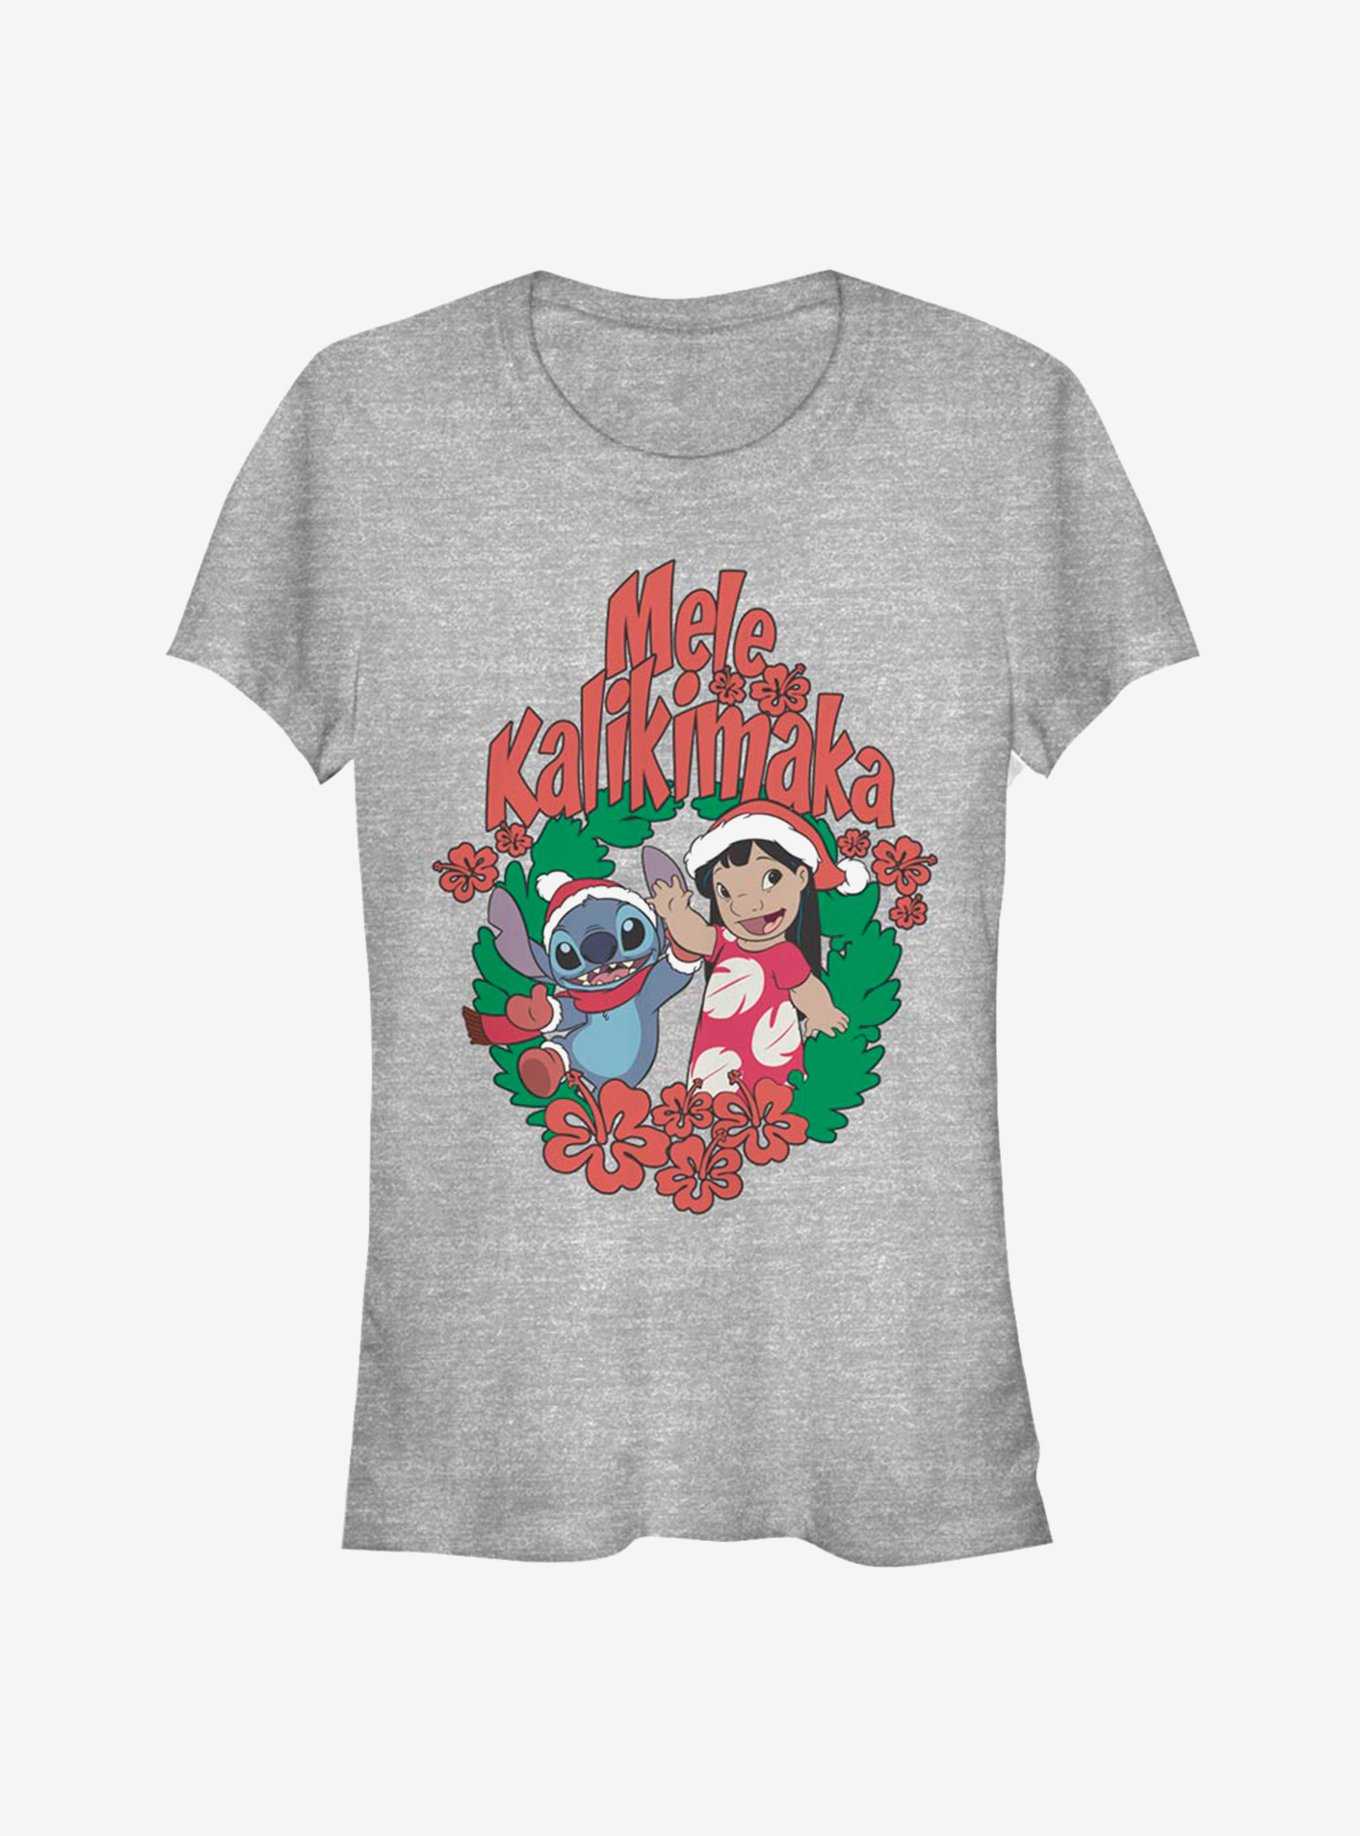 Disney Lilo & Stitch Christmas Wreath Girls T-Shirt, , hi-res